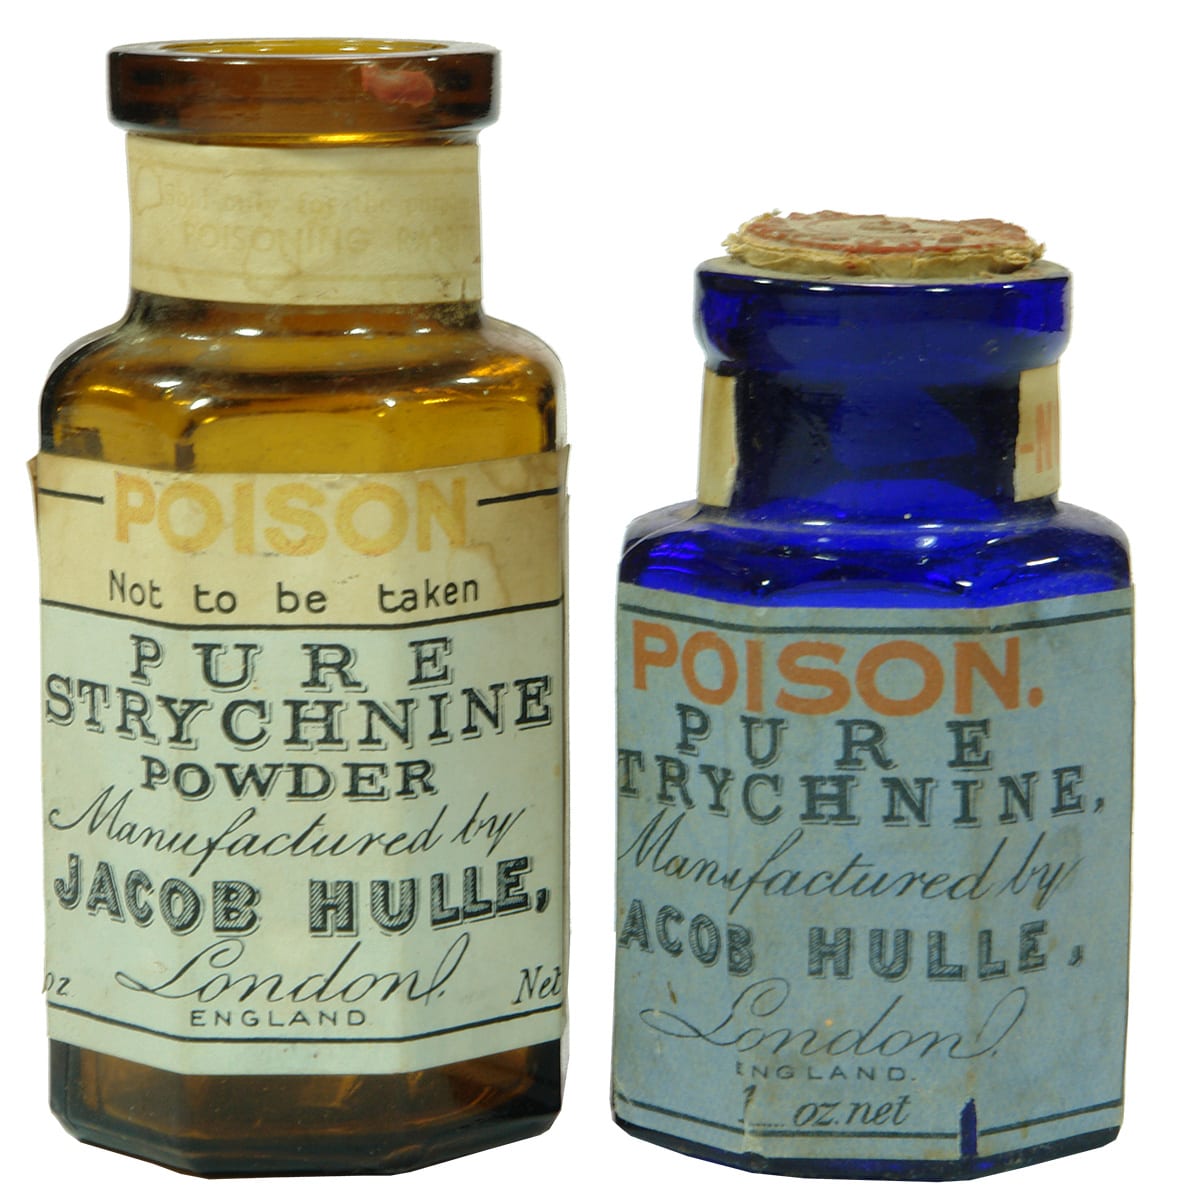 Jacob Hulle Strychnine Glass Bottles